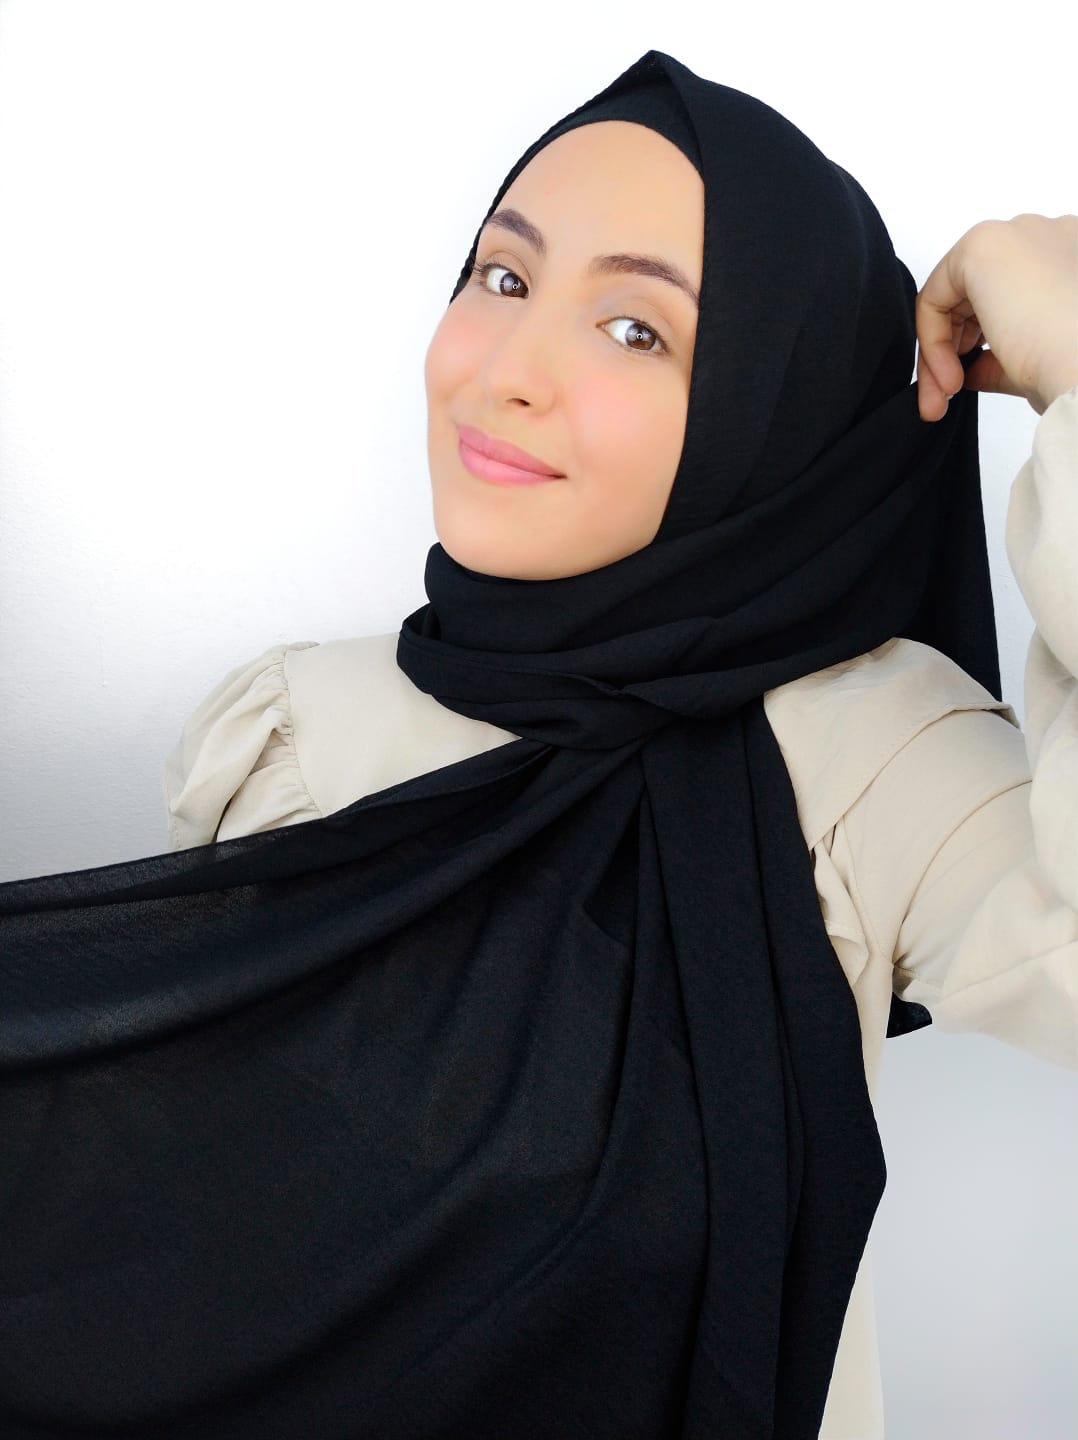 Hijab crinckle crepe nero - Hijab Paradise 